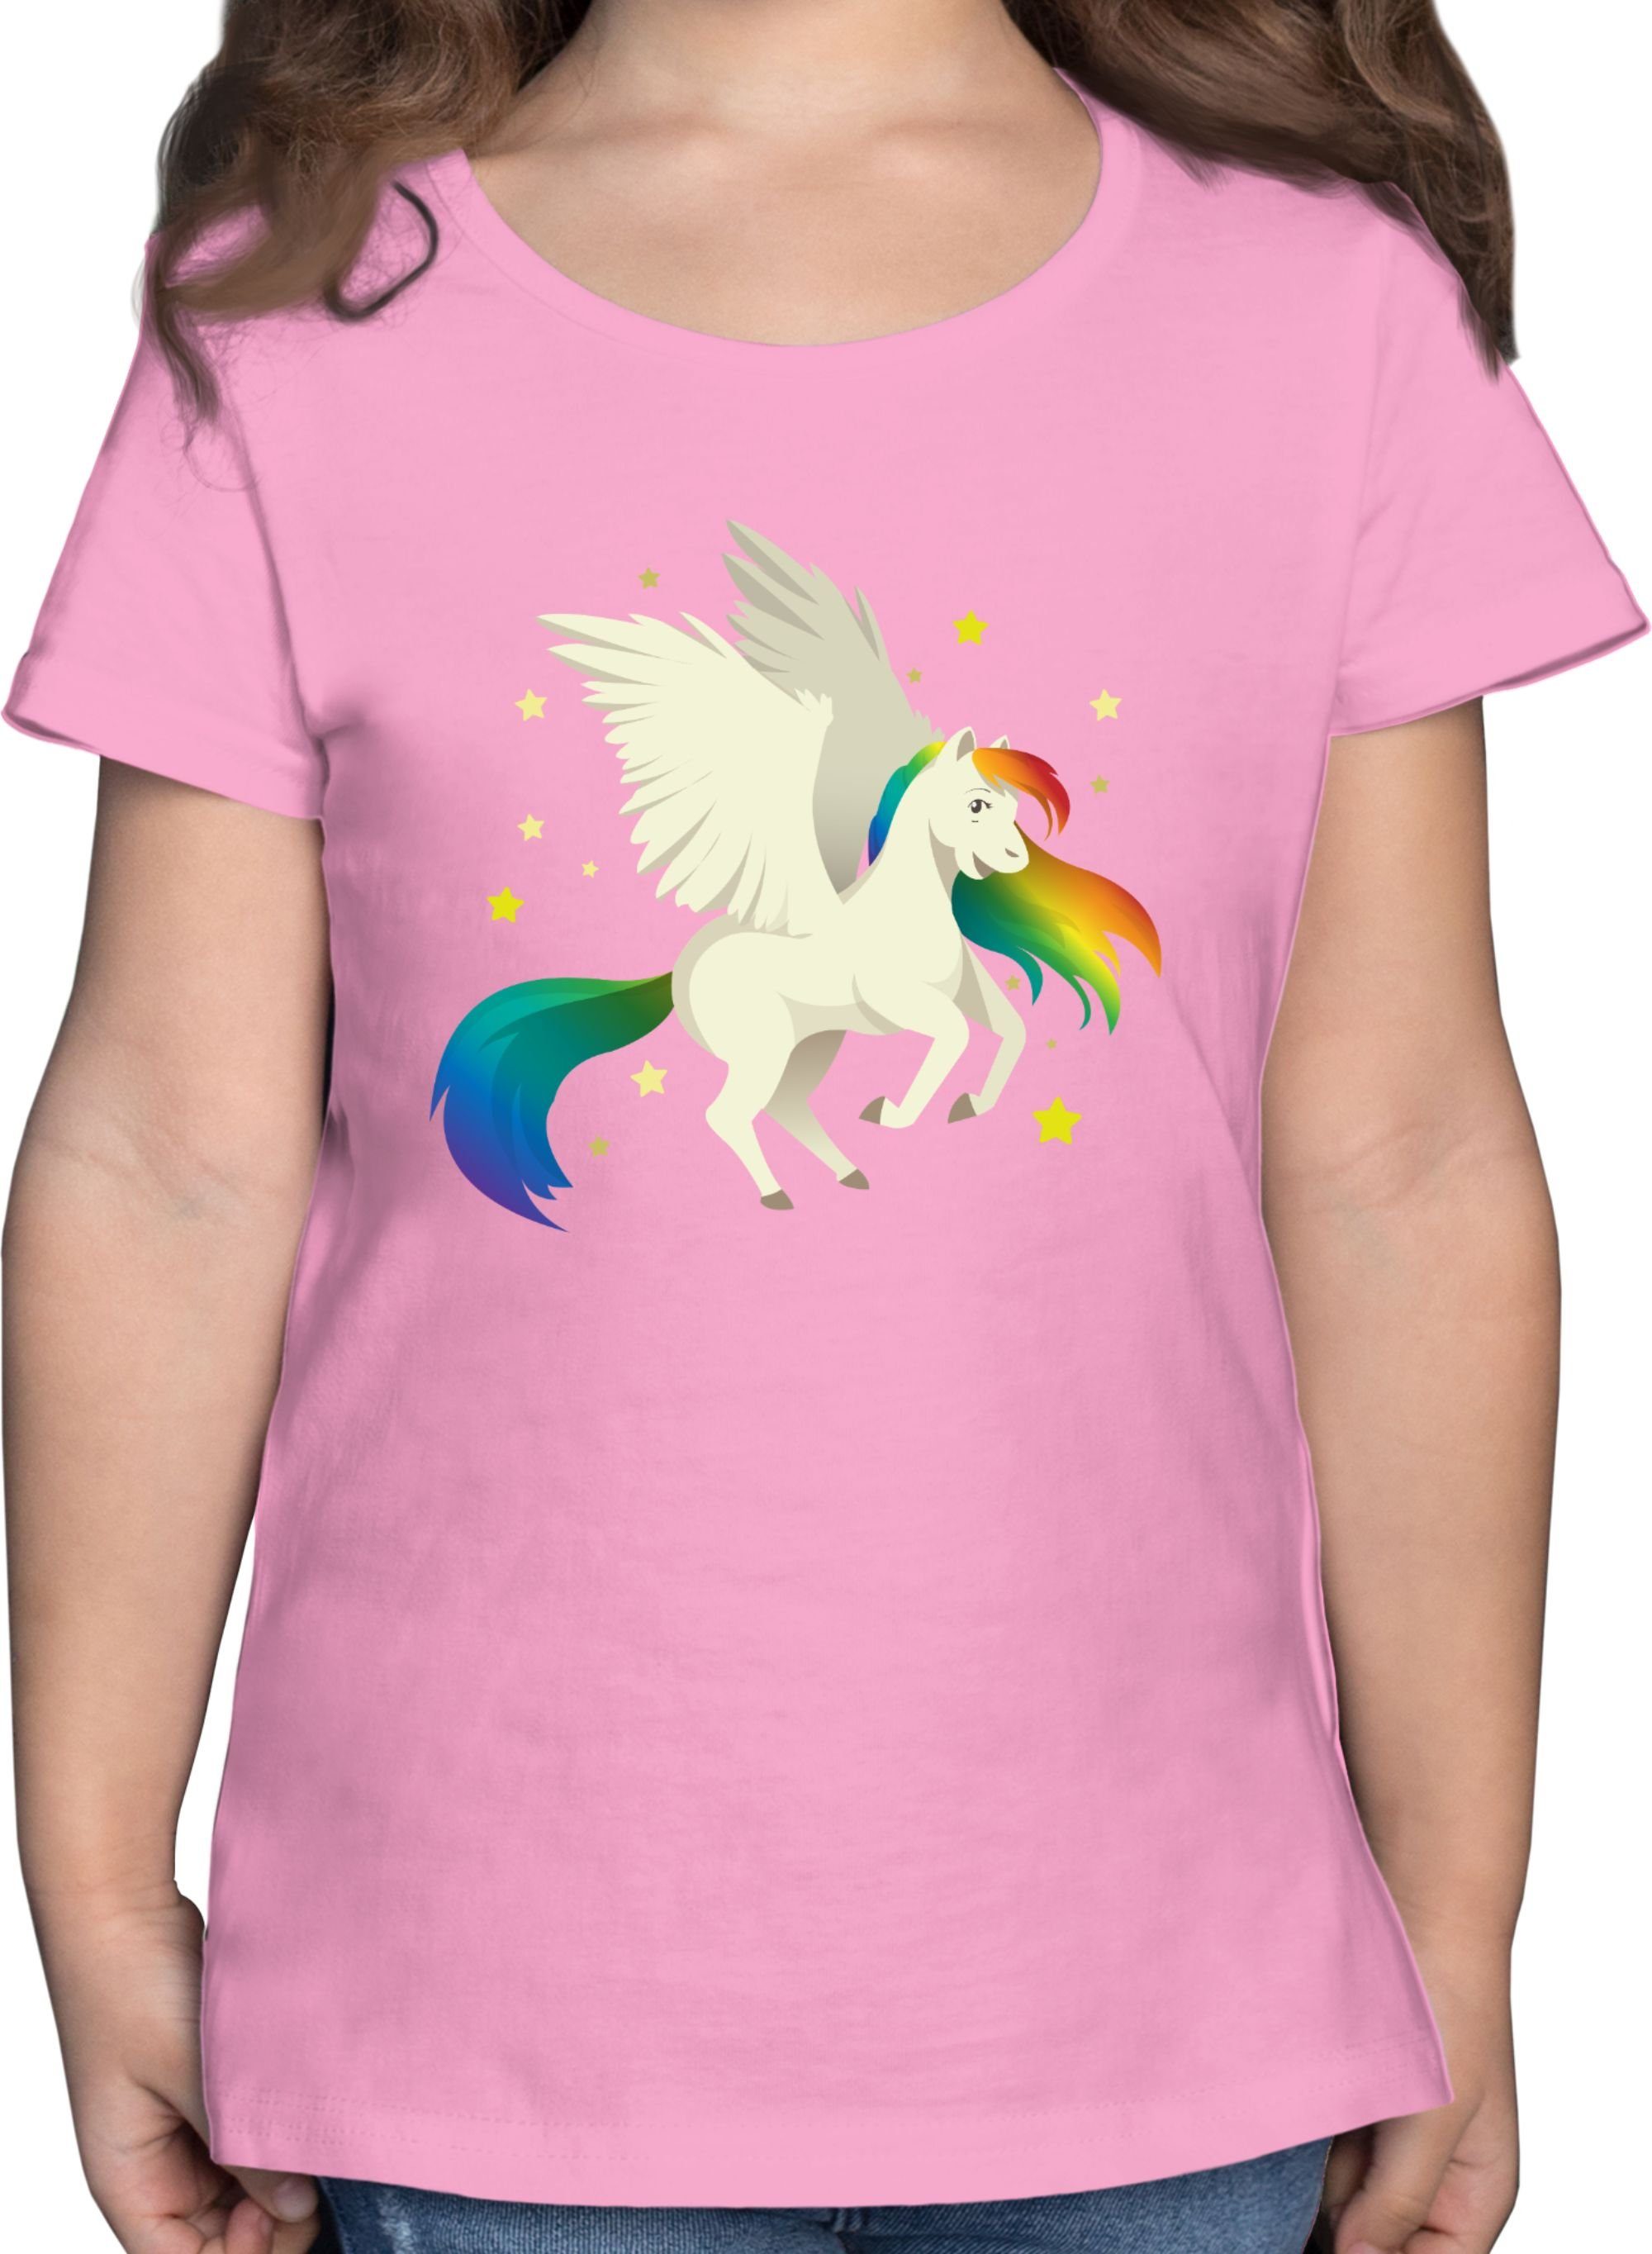 Shirtracer T-Shirt Pegasus Kinderkleidung und Co 2 Rosa